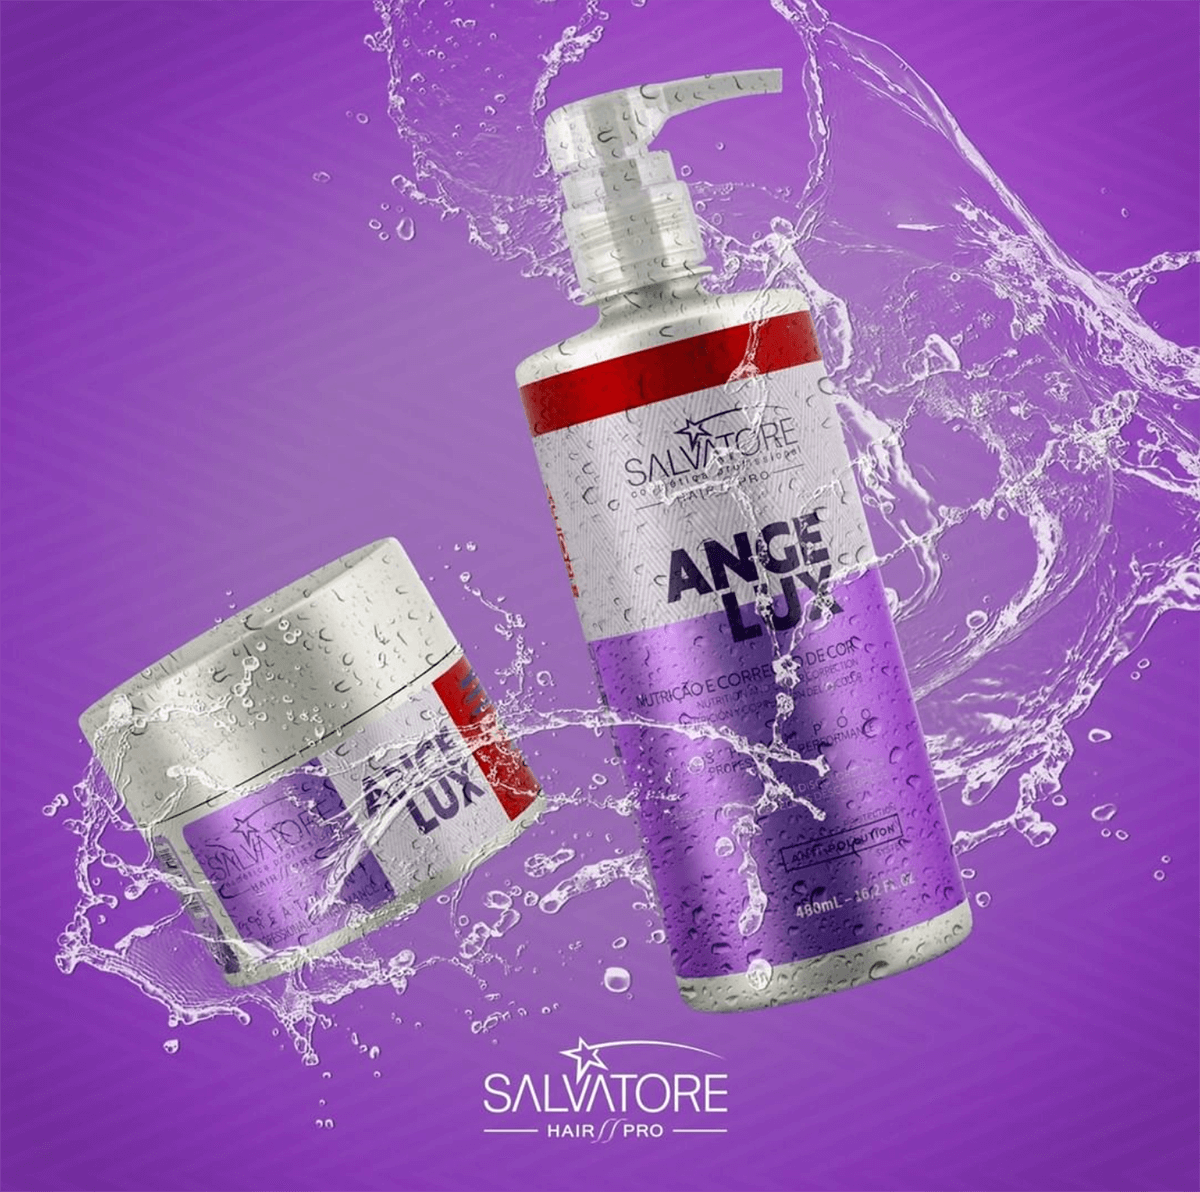 SALVATORE - Ange Lux Hair Pro, Shampoo 480ml